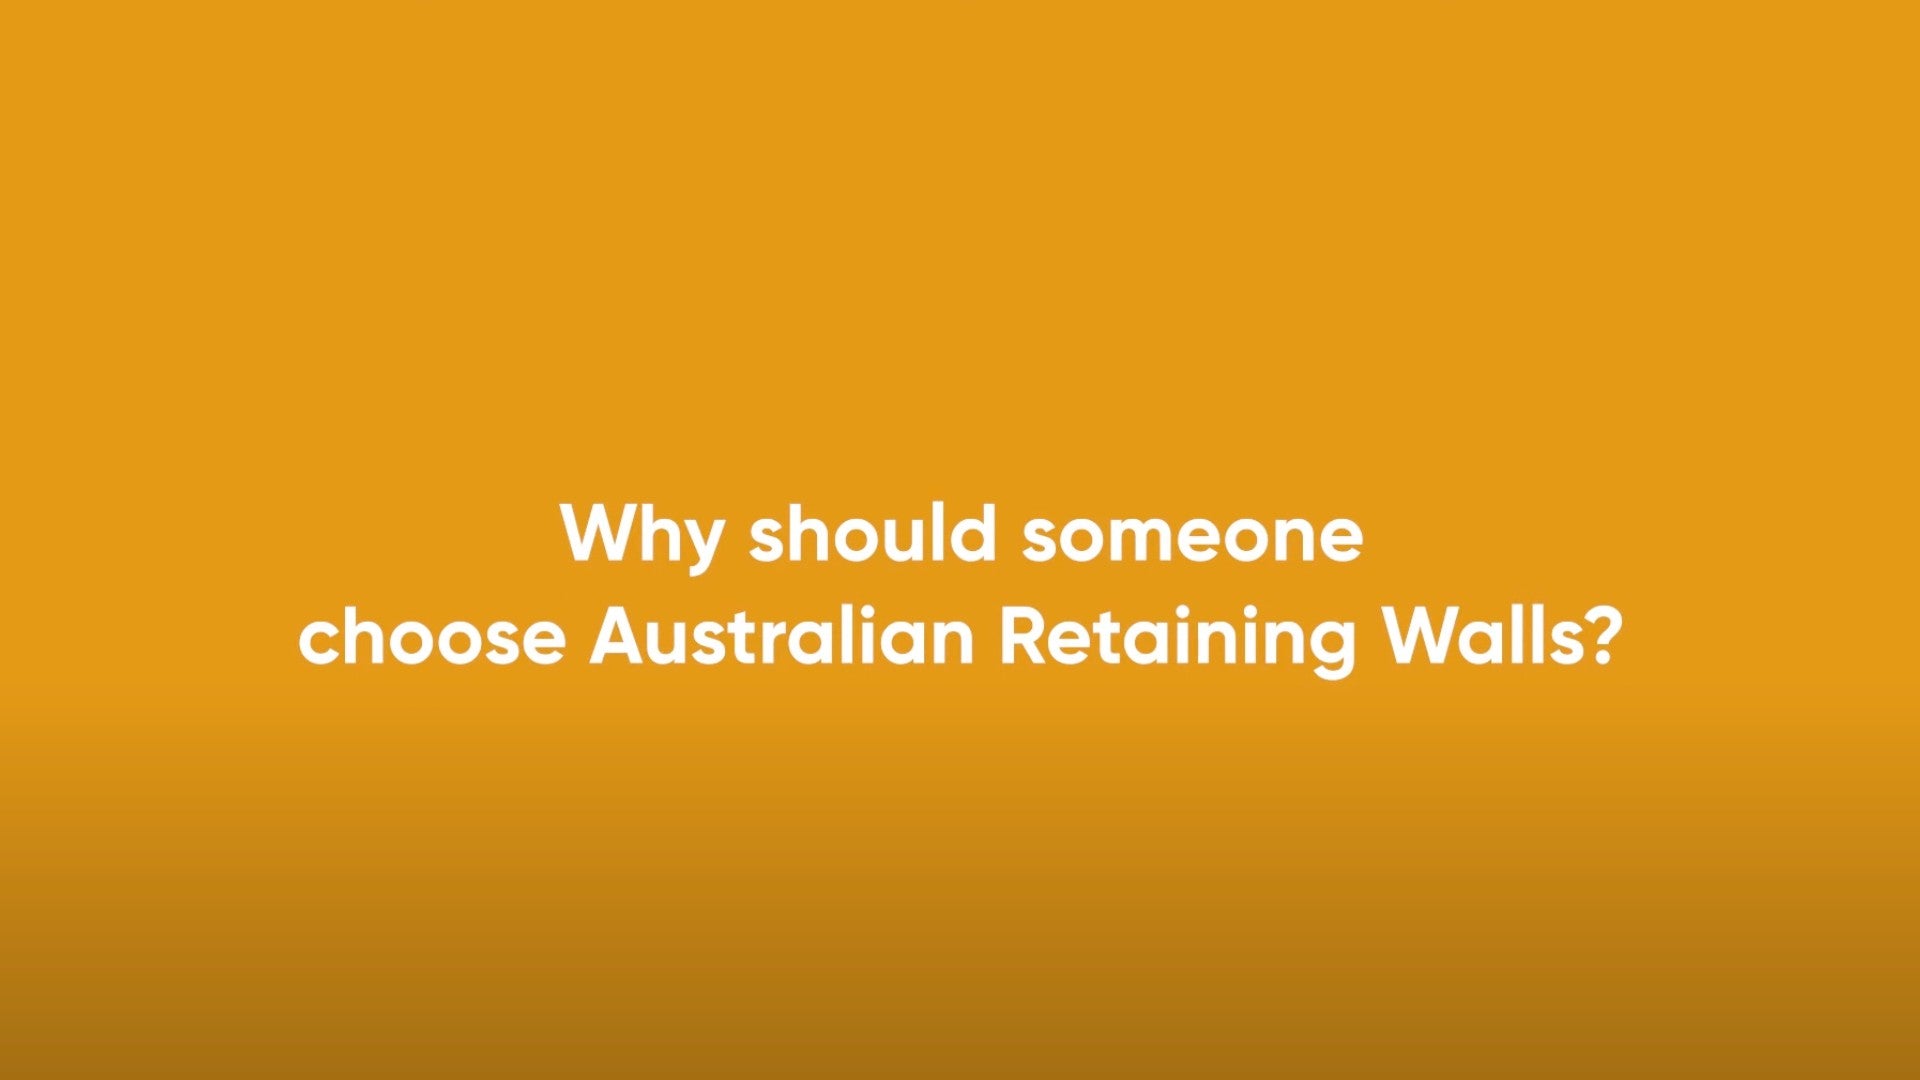 Load video: Australian Retaining Walls